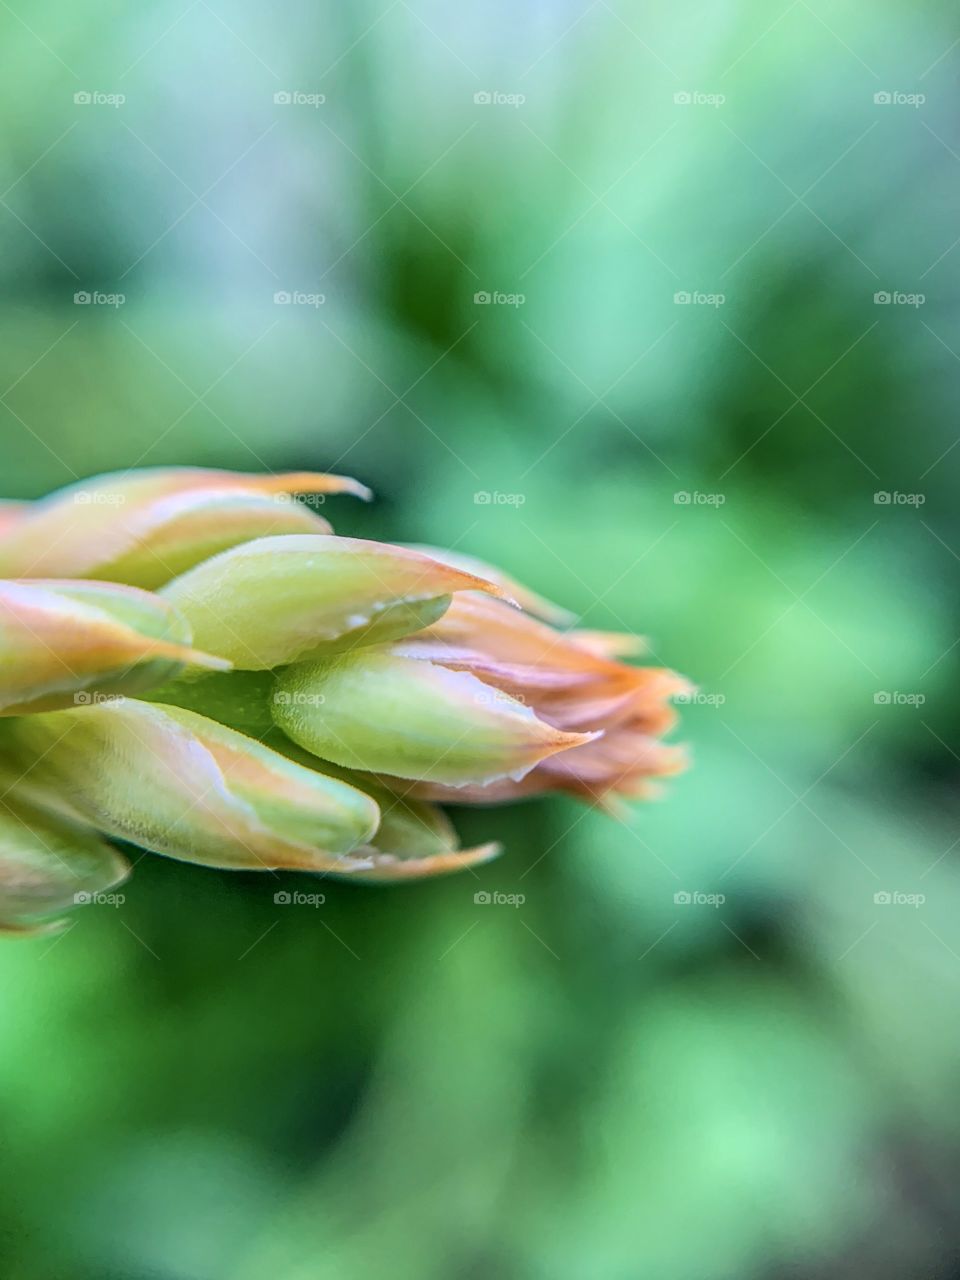 Macro photography: Aloe vera flowers blooming